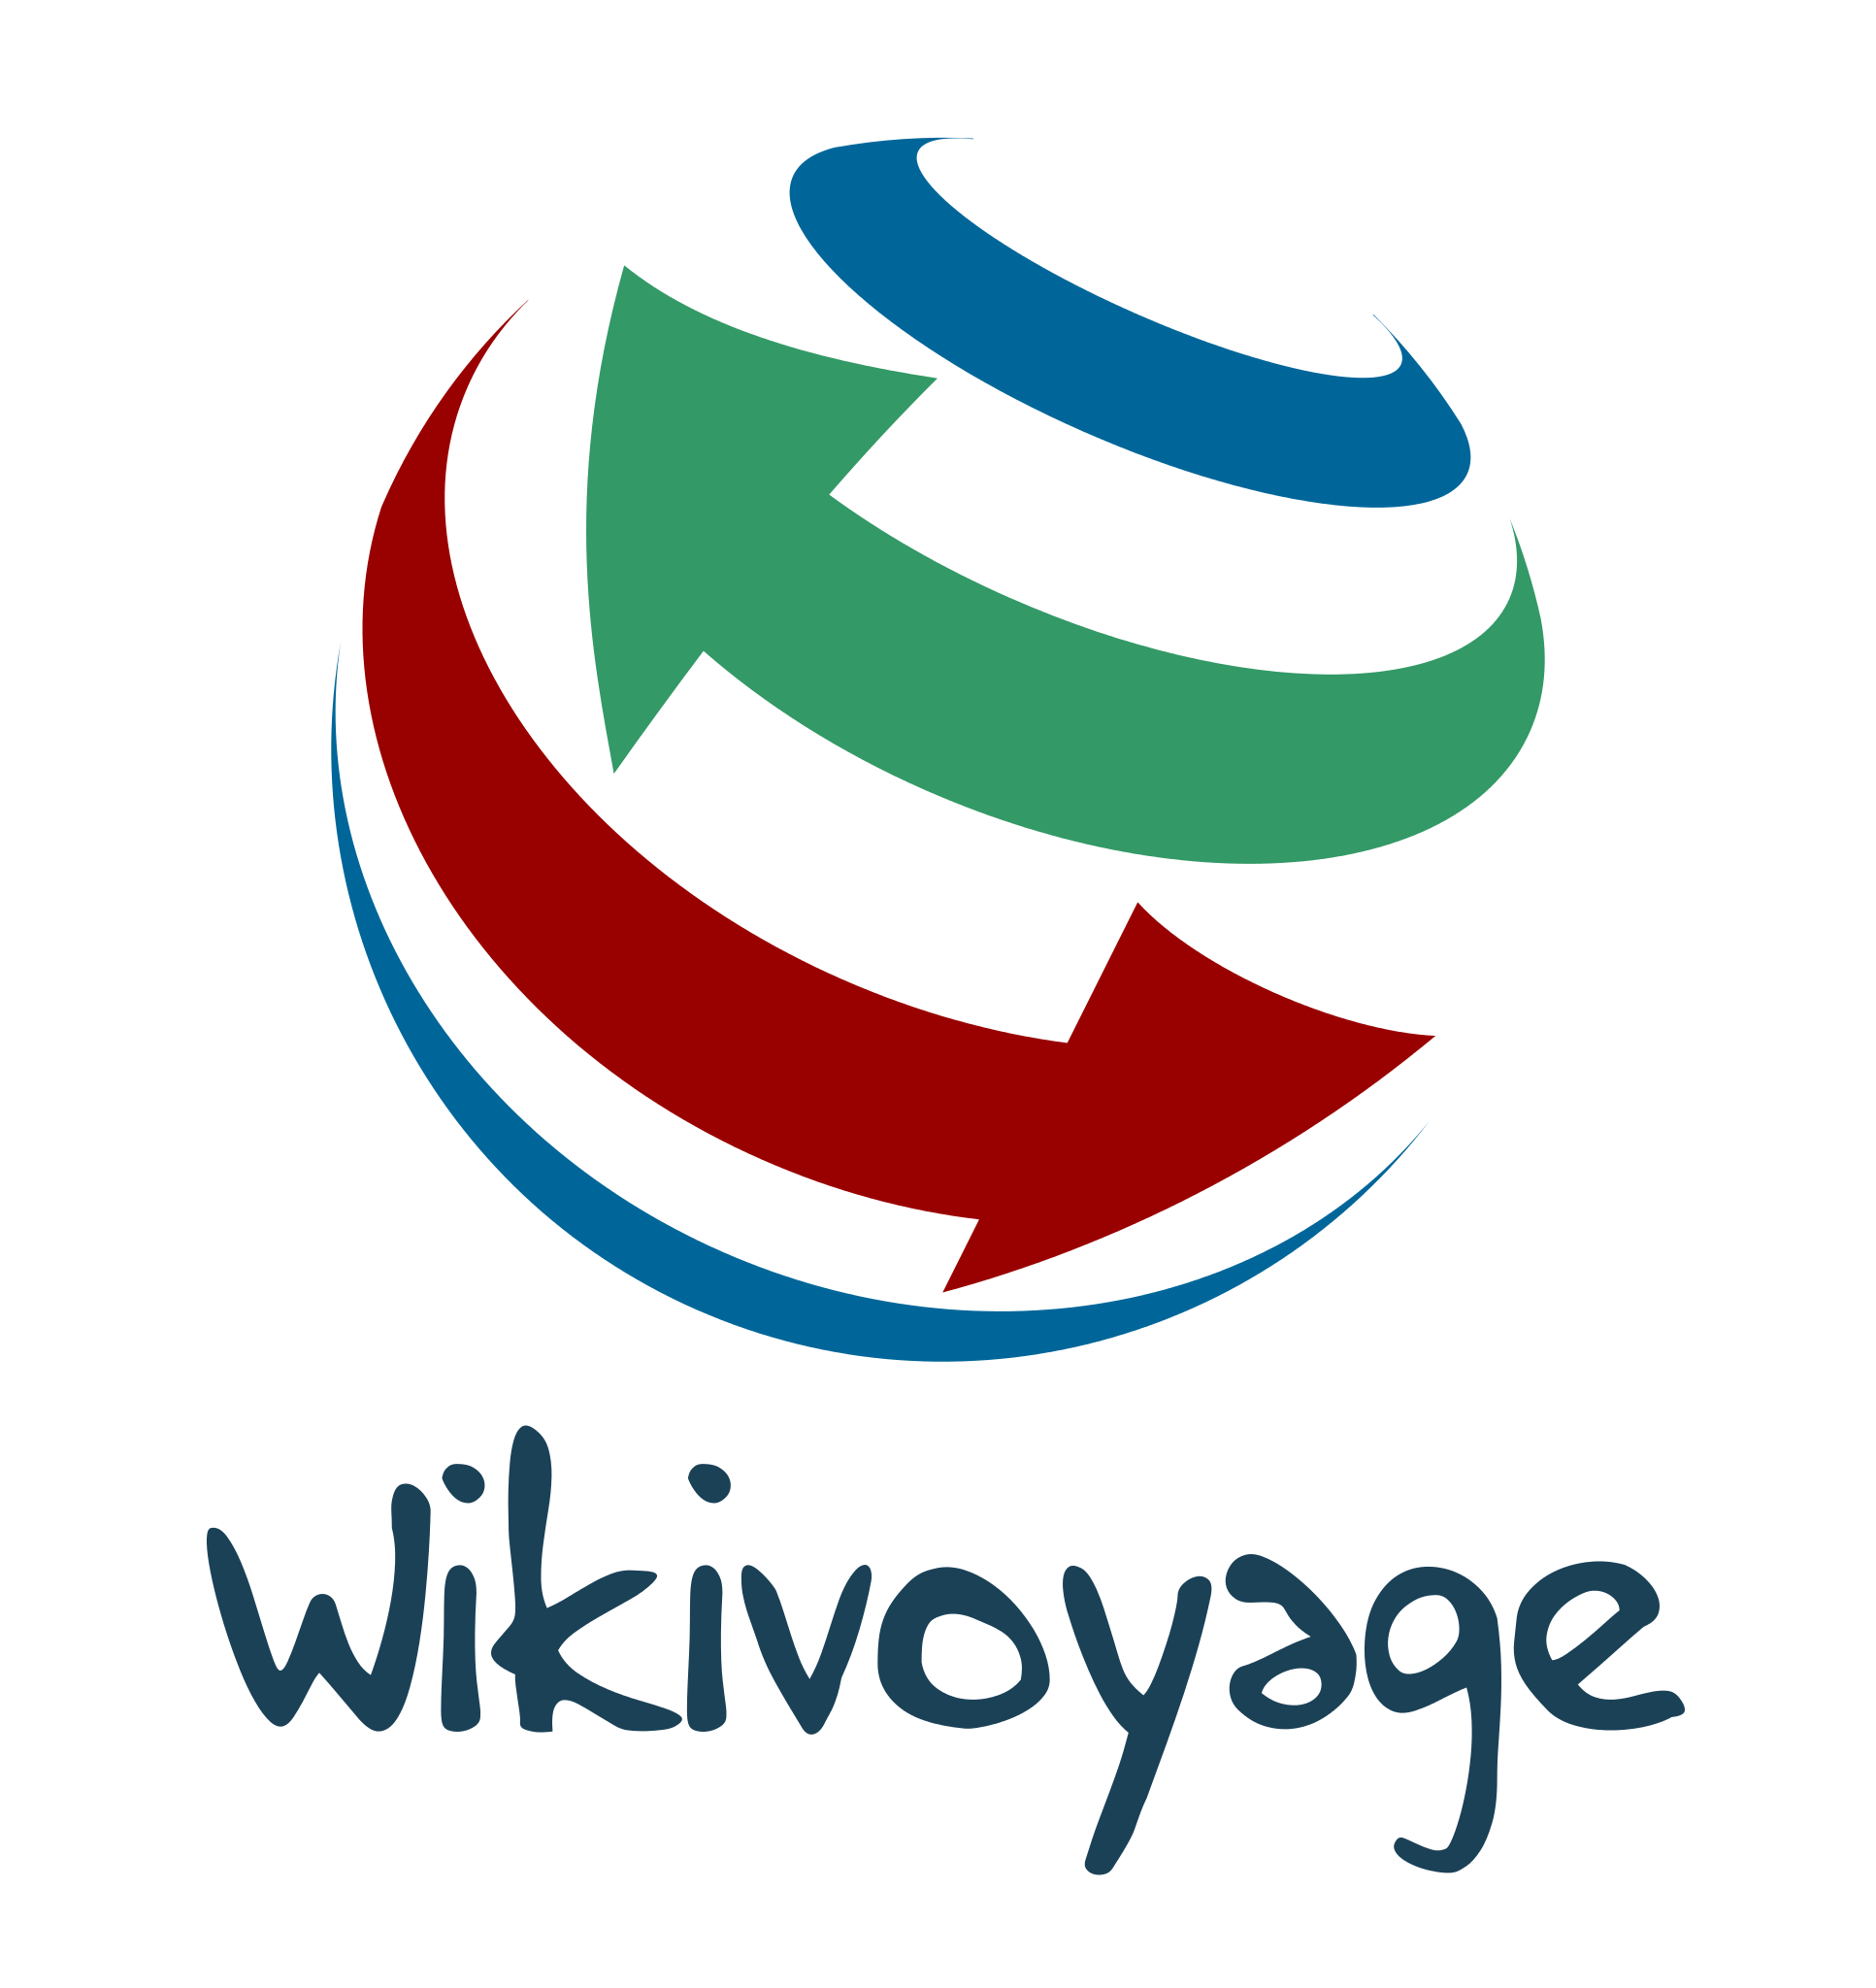 File:Google Translate logo.svg - Wikimedia Commons